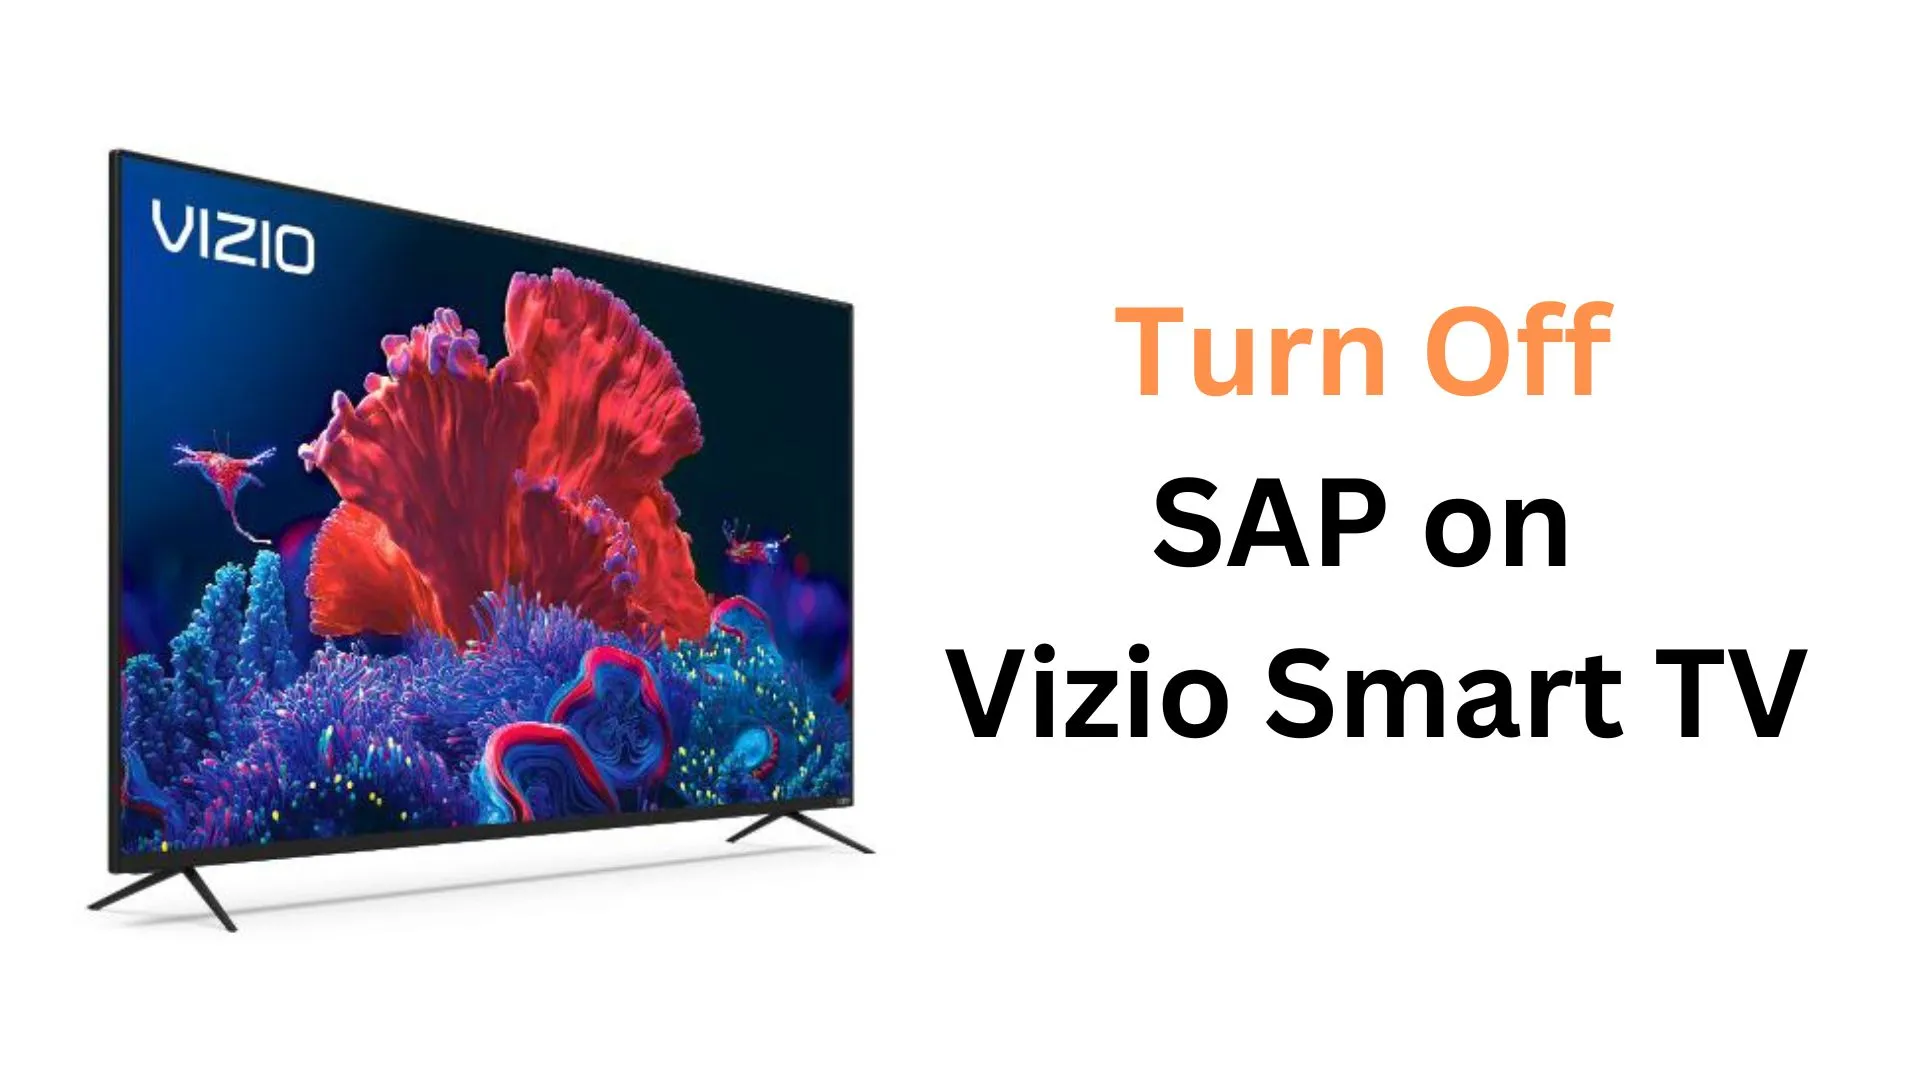 How to Turn Off SAP on Vizio Smart TV